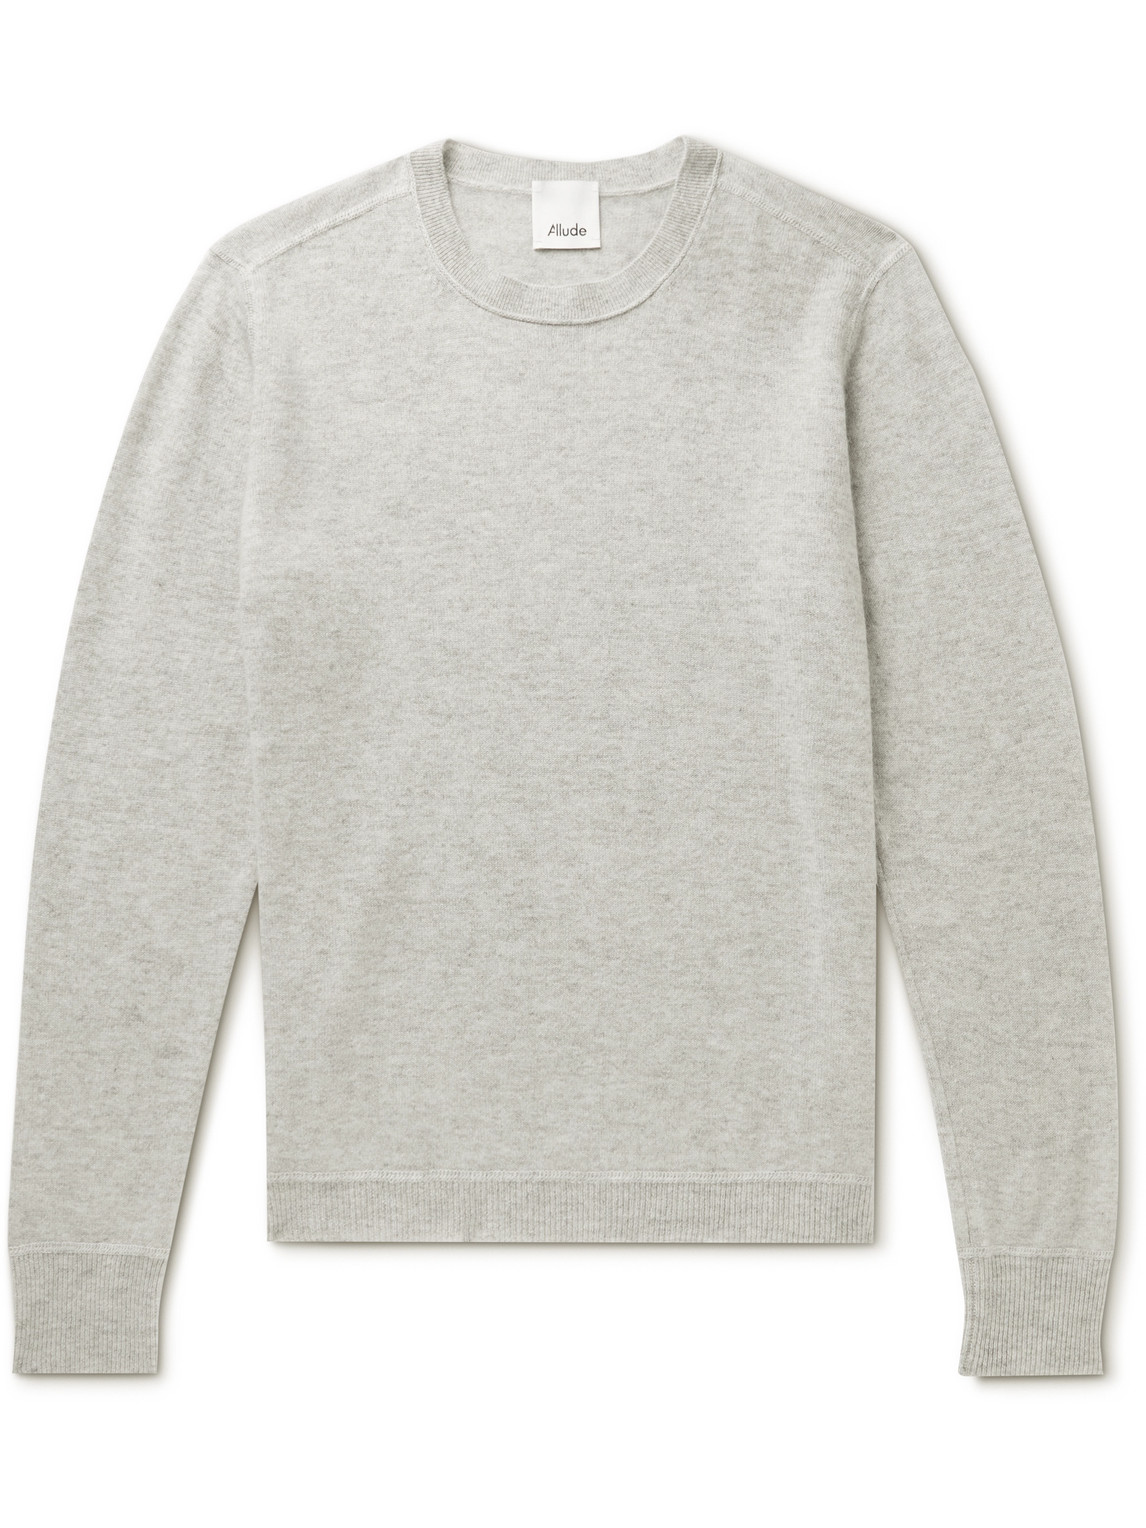 Allude Cashmere Sweater In Gray